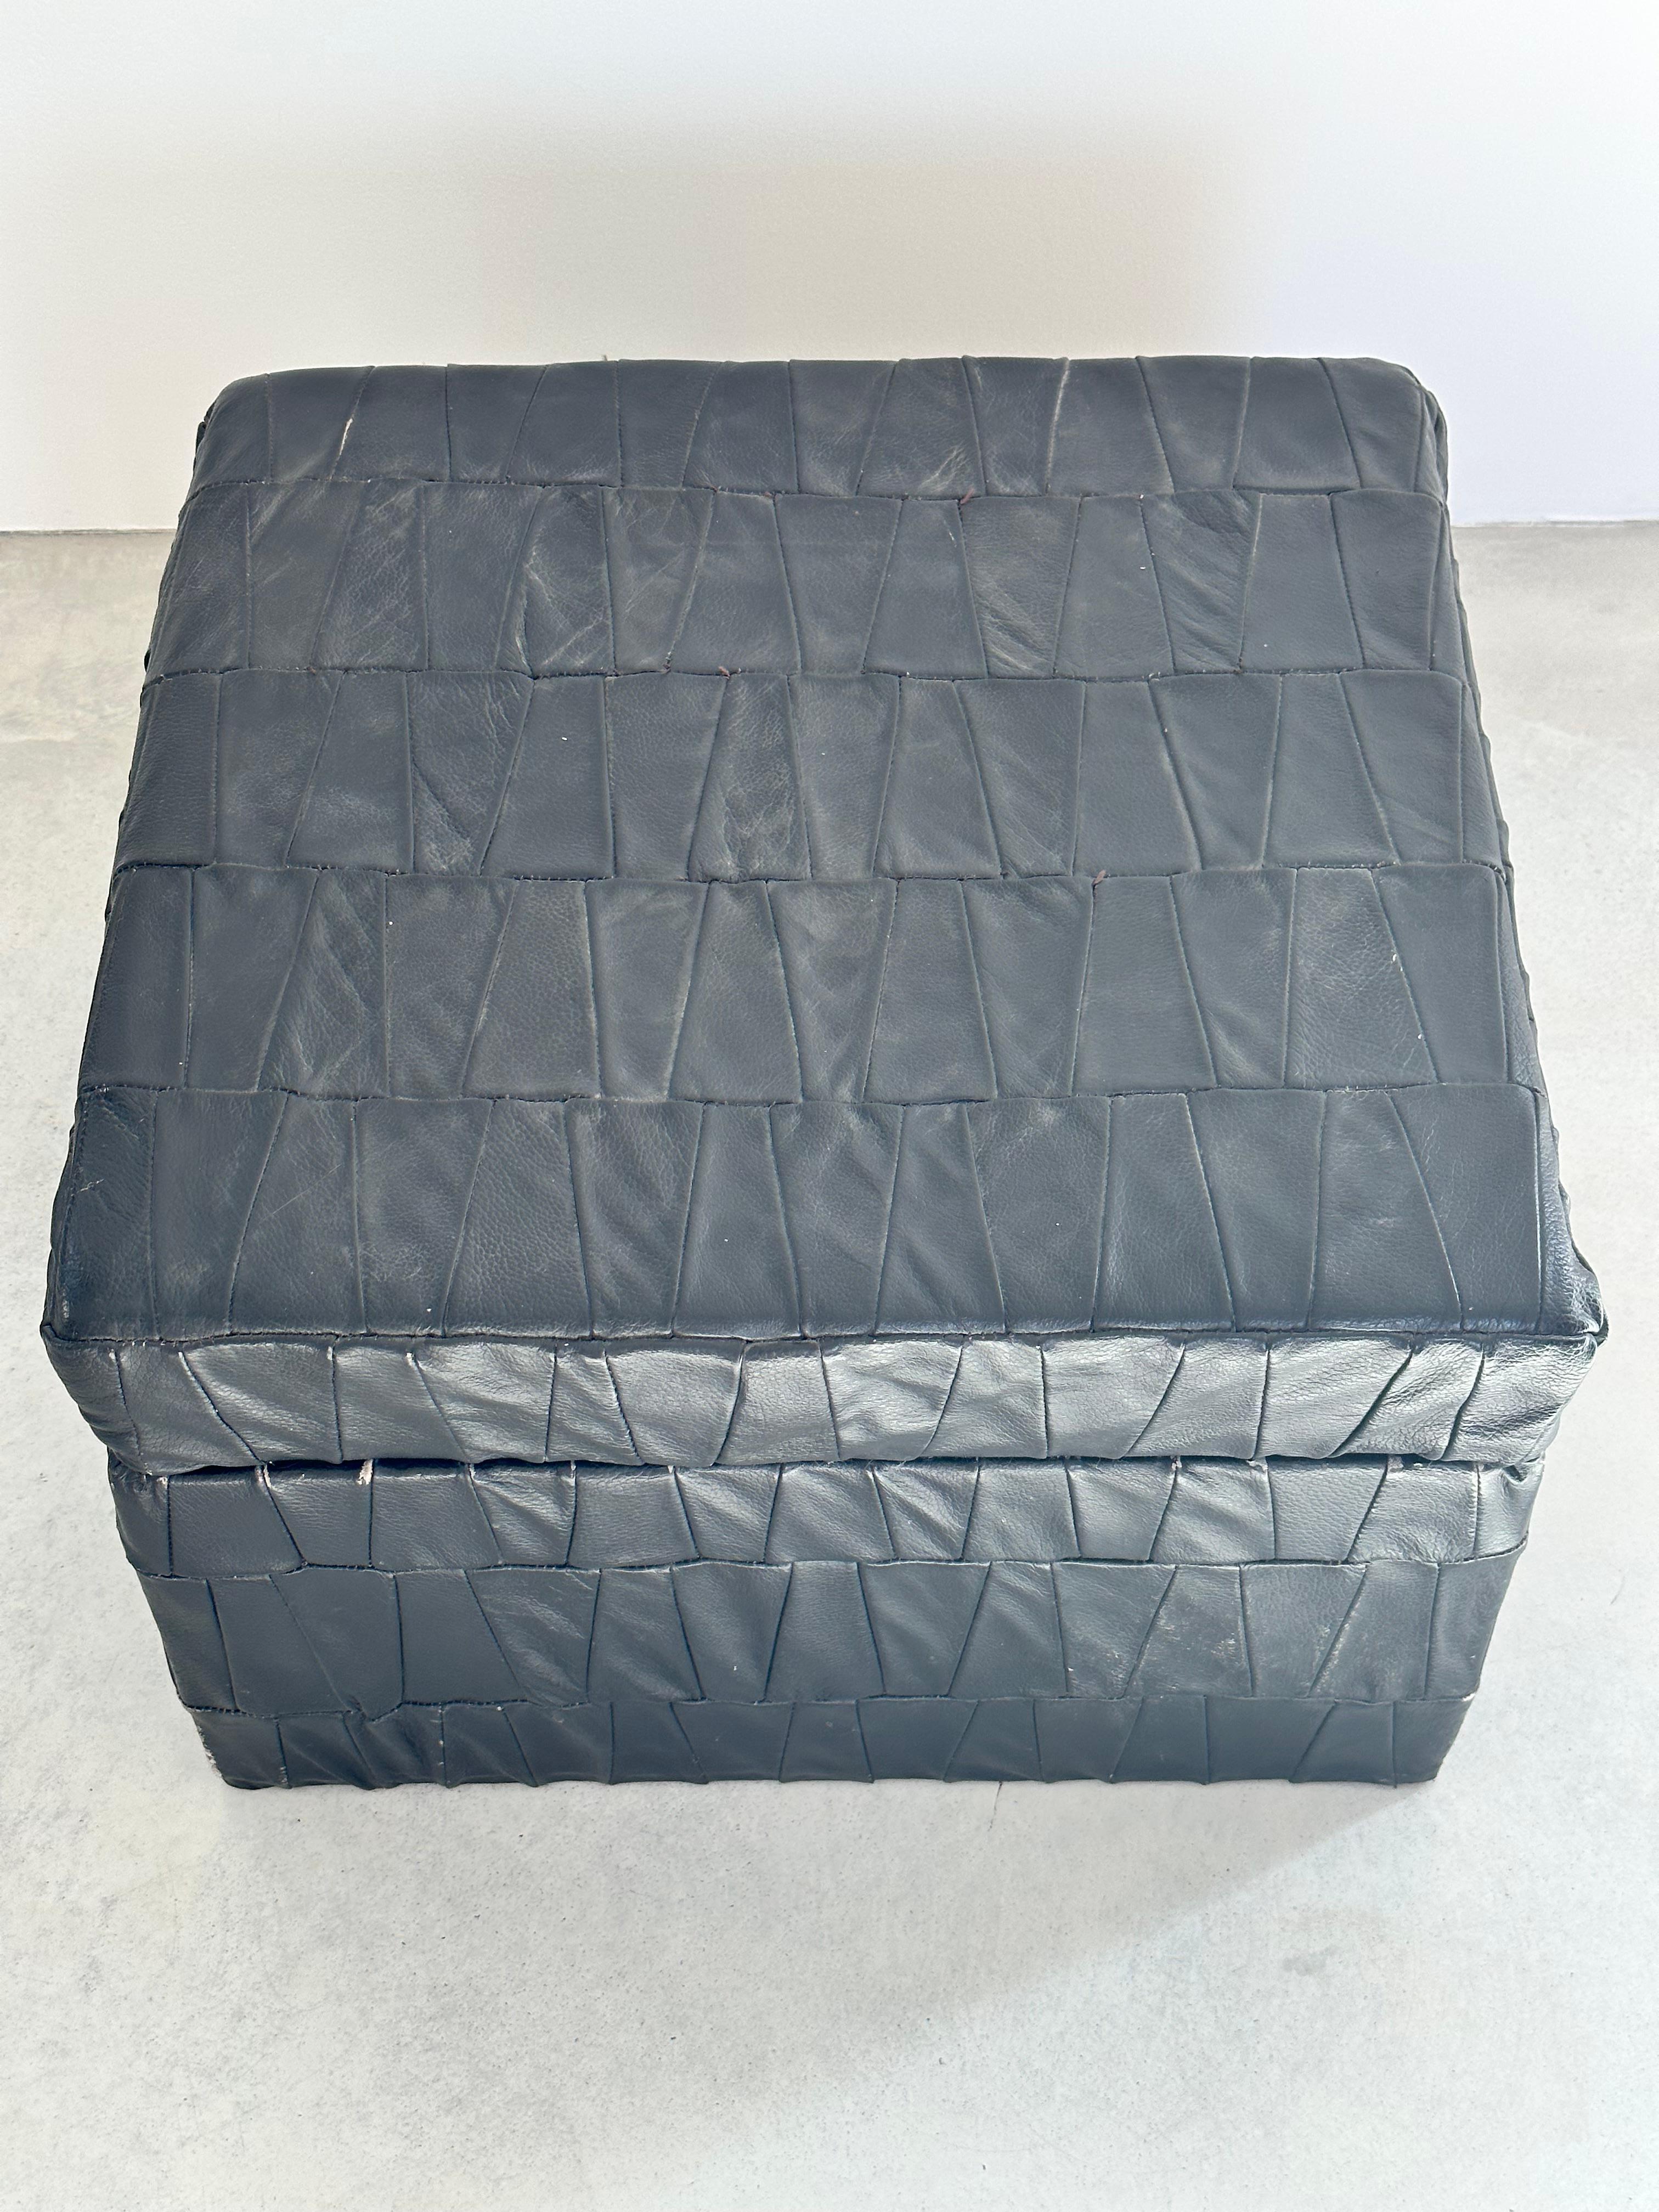 Space Age De Sede Design Black Leather Patchwork Storage Ottoman, Switzerland 1970s For Sale